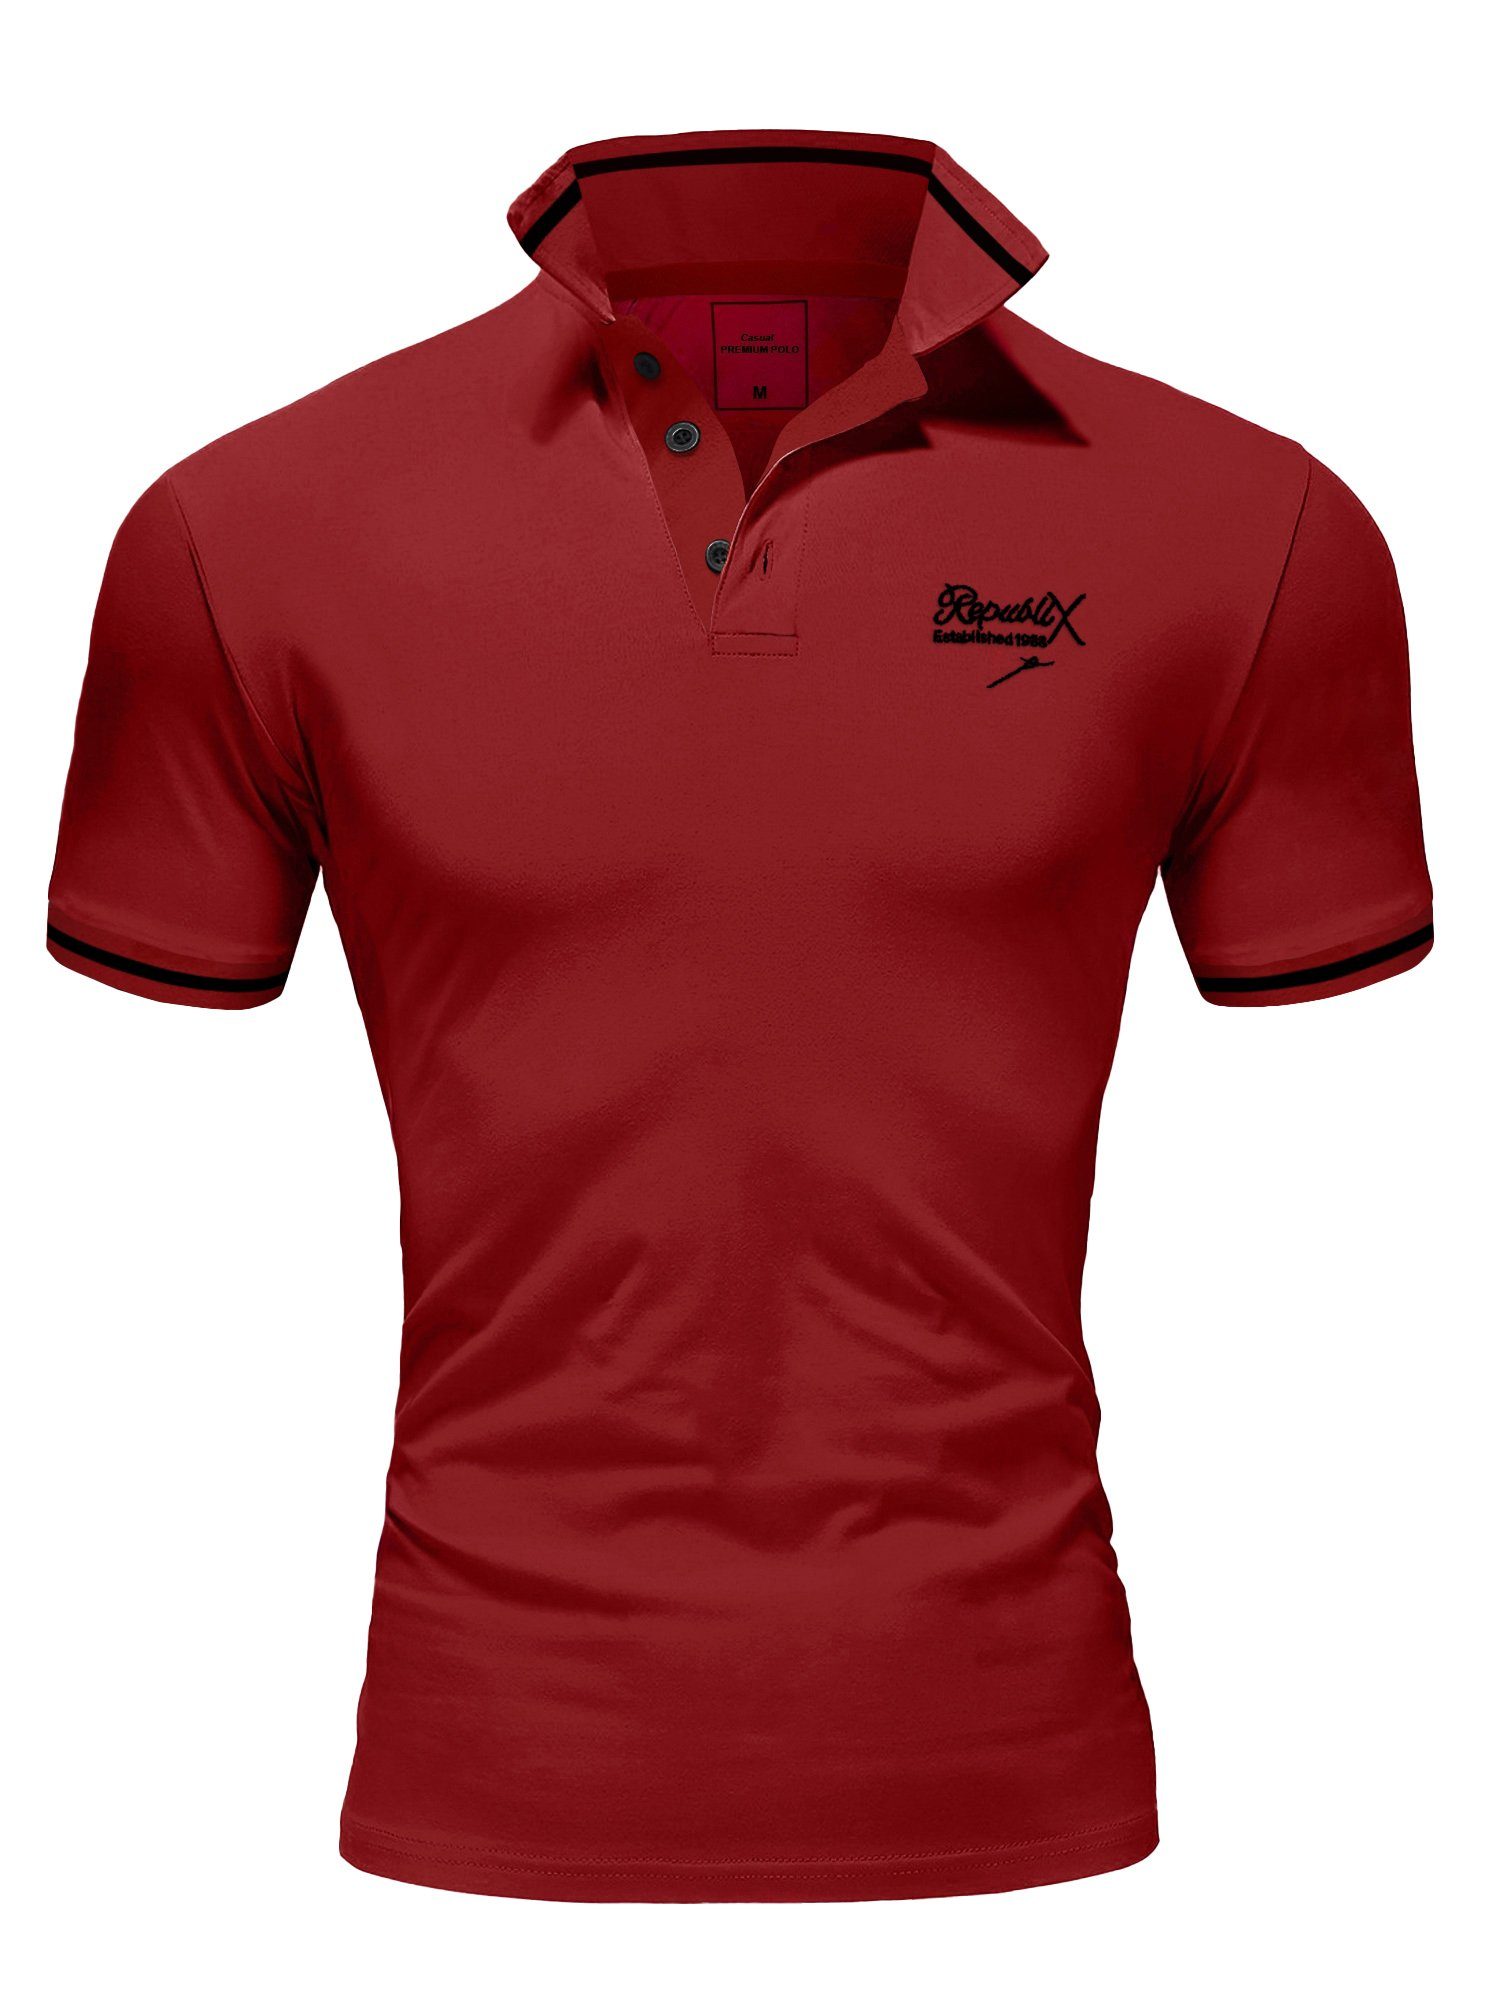 REPUBLIX Poloshirt GABRIEL Herren Basic Kurzarm Kontrast Polo Hemd Bordeaux/Schwarz